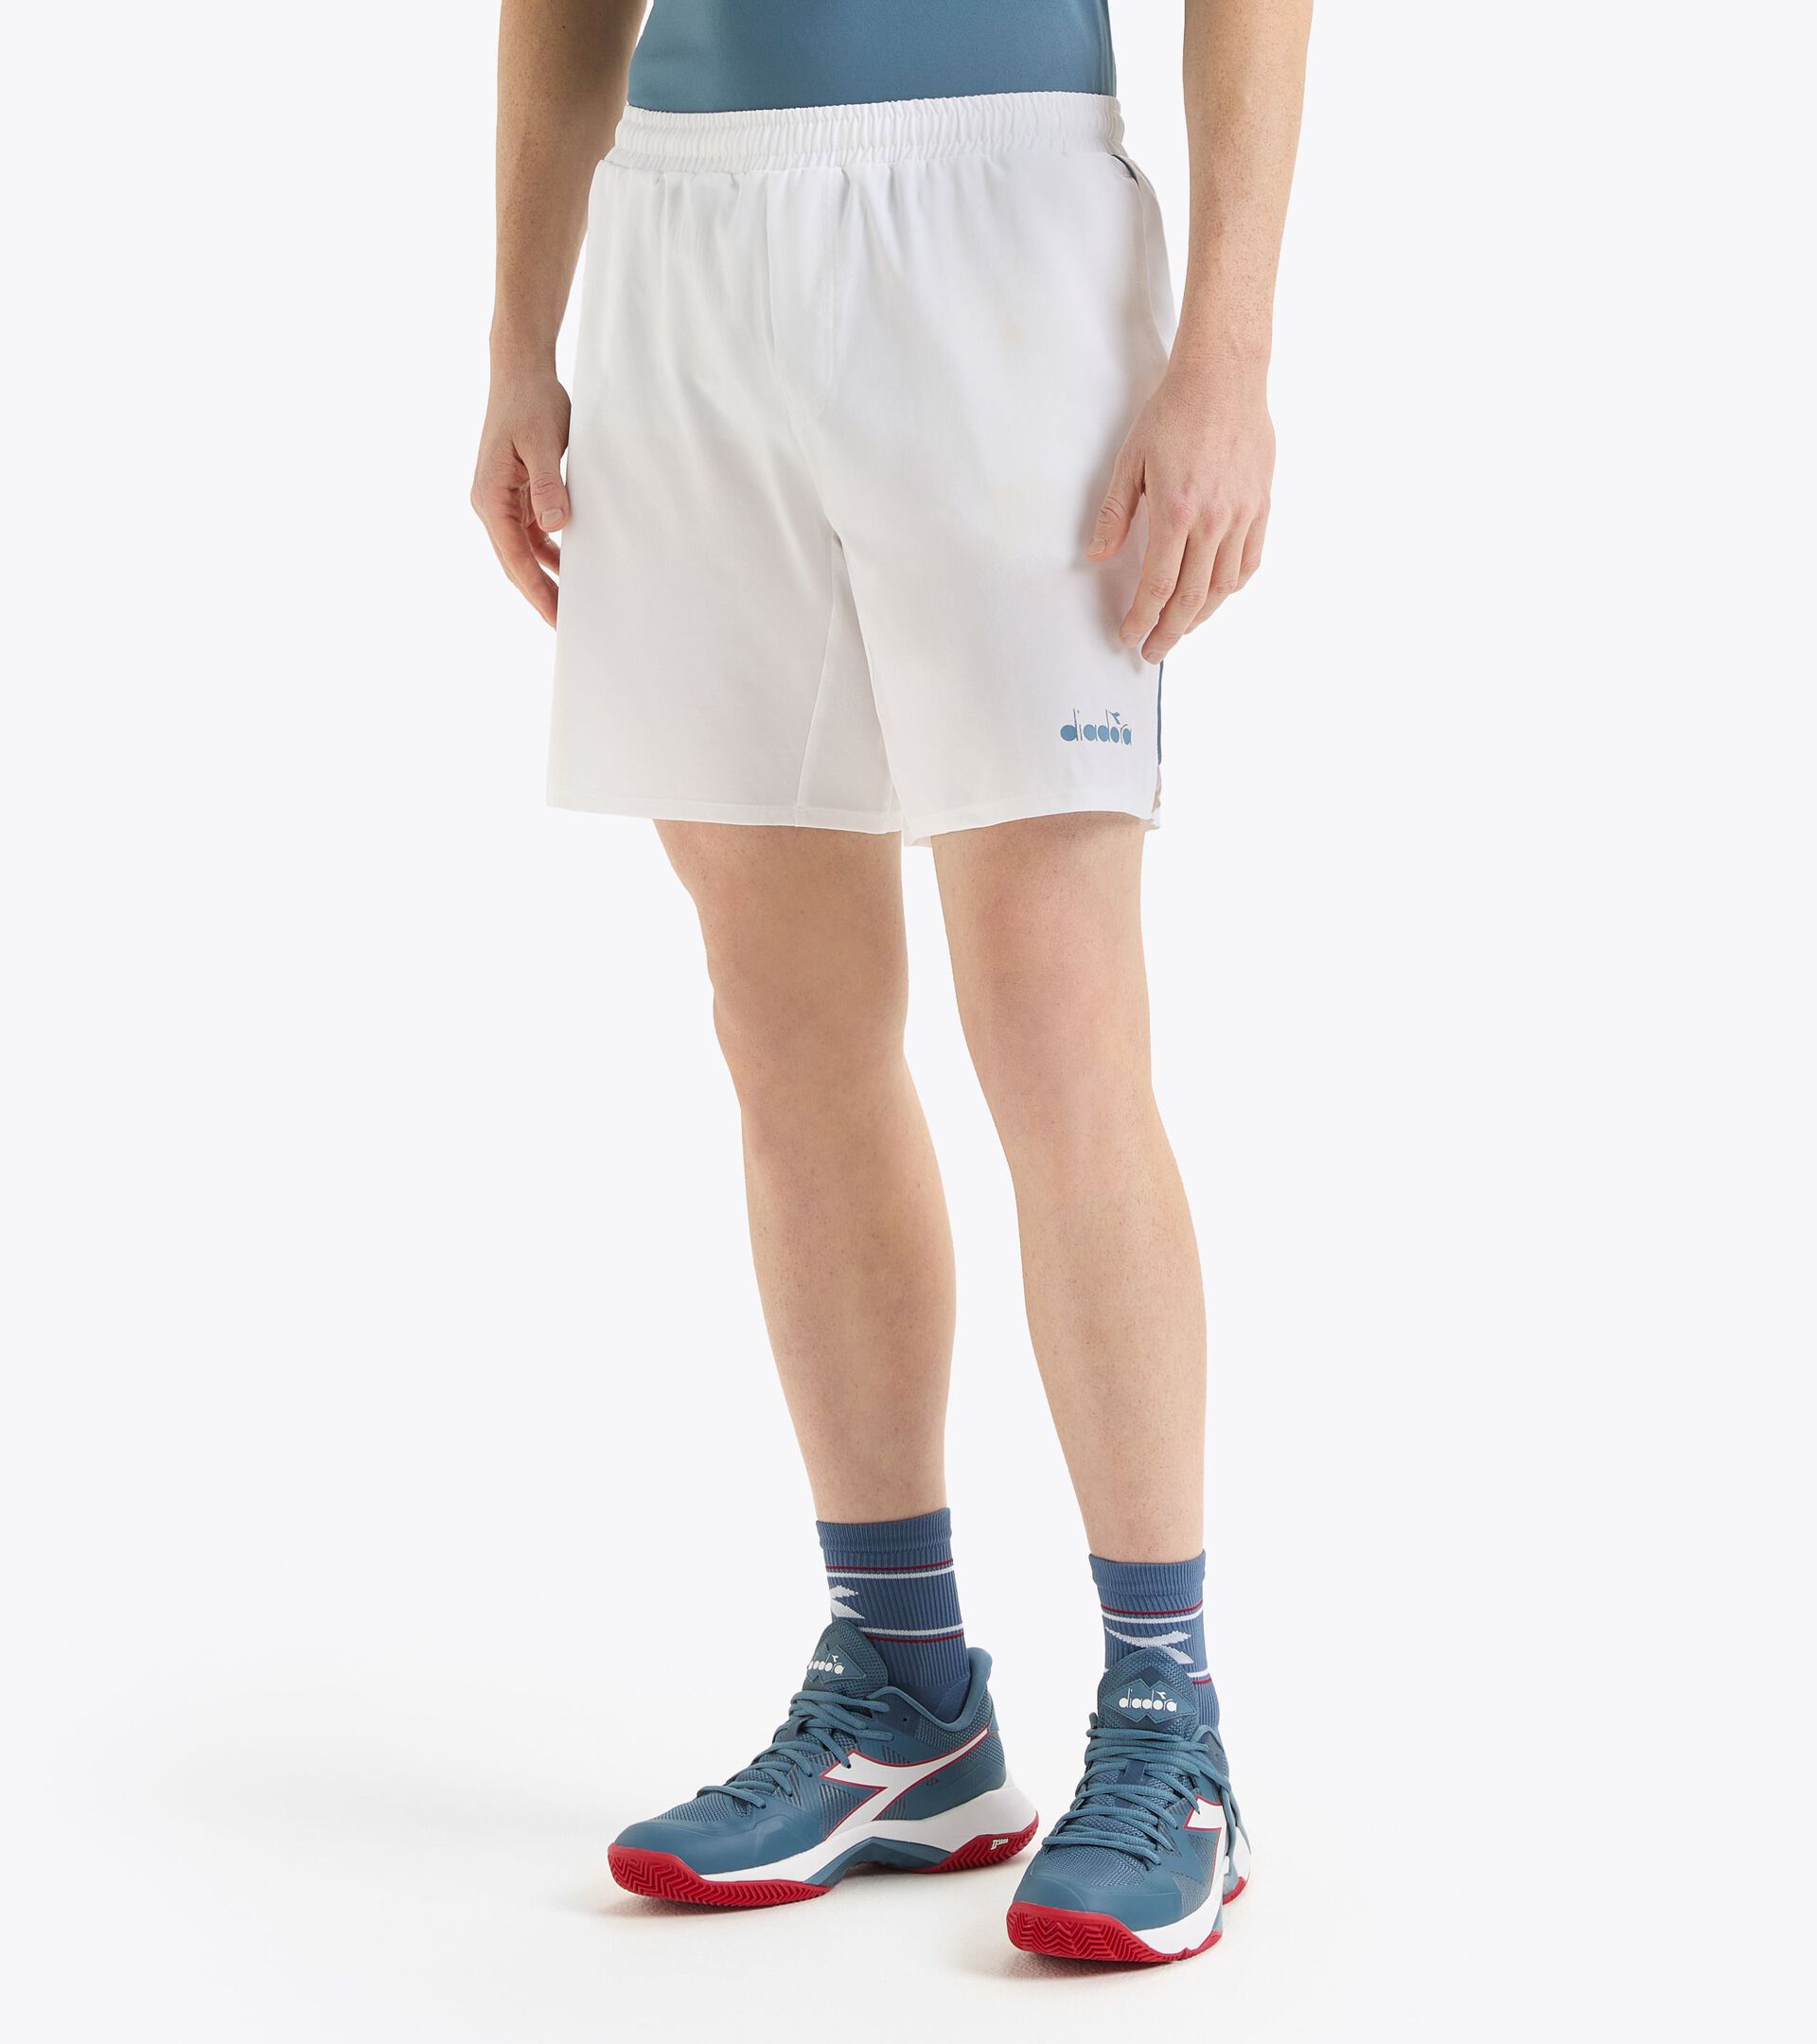 Pantaloncini da tennis 9’’ - Uomo
 SHORTS CORE 9" BIANCO OTTICO - Diadora